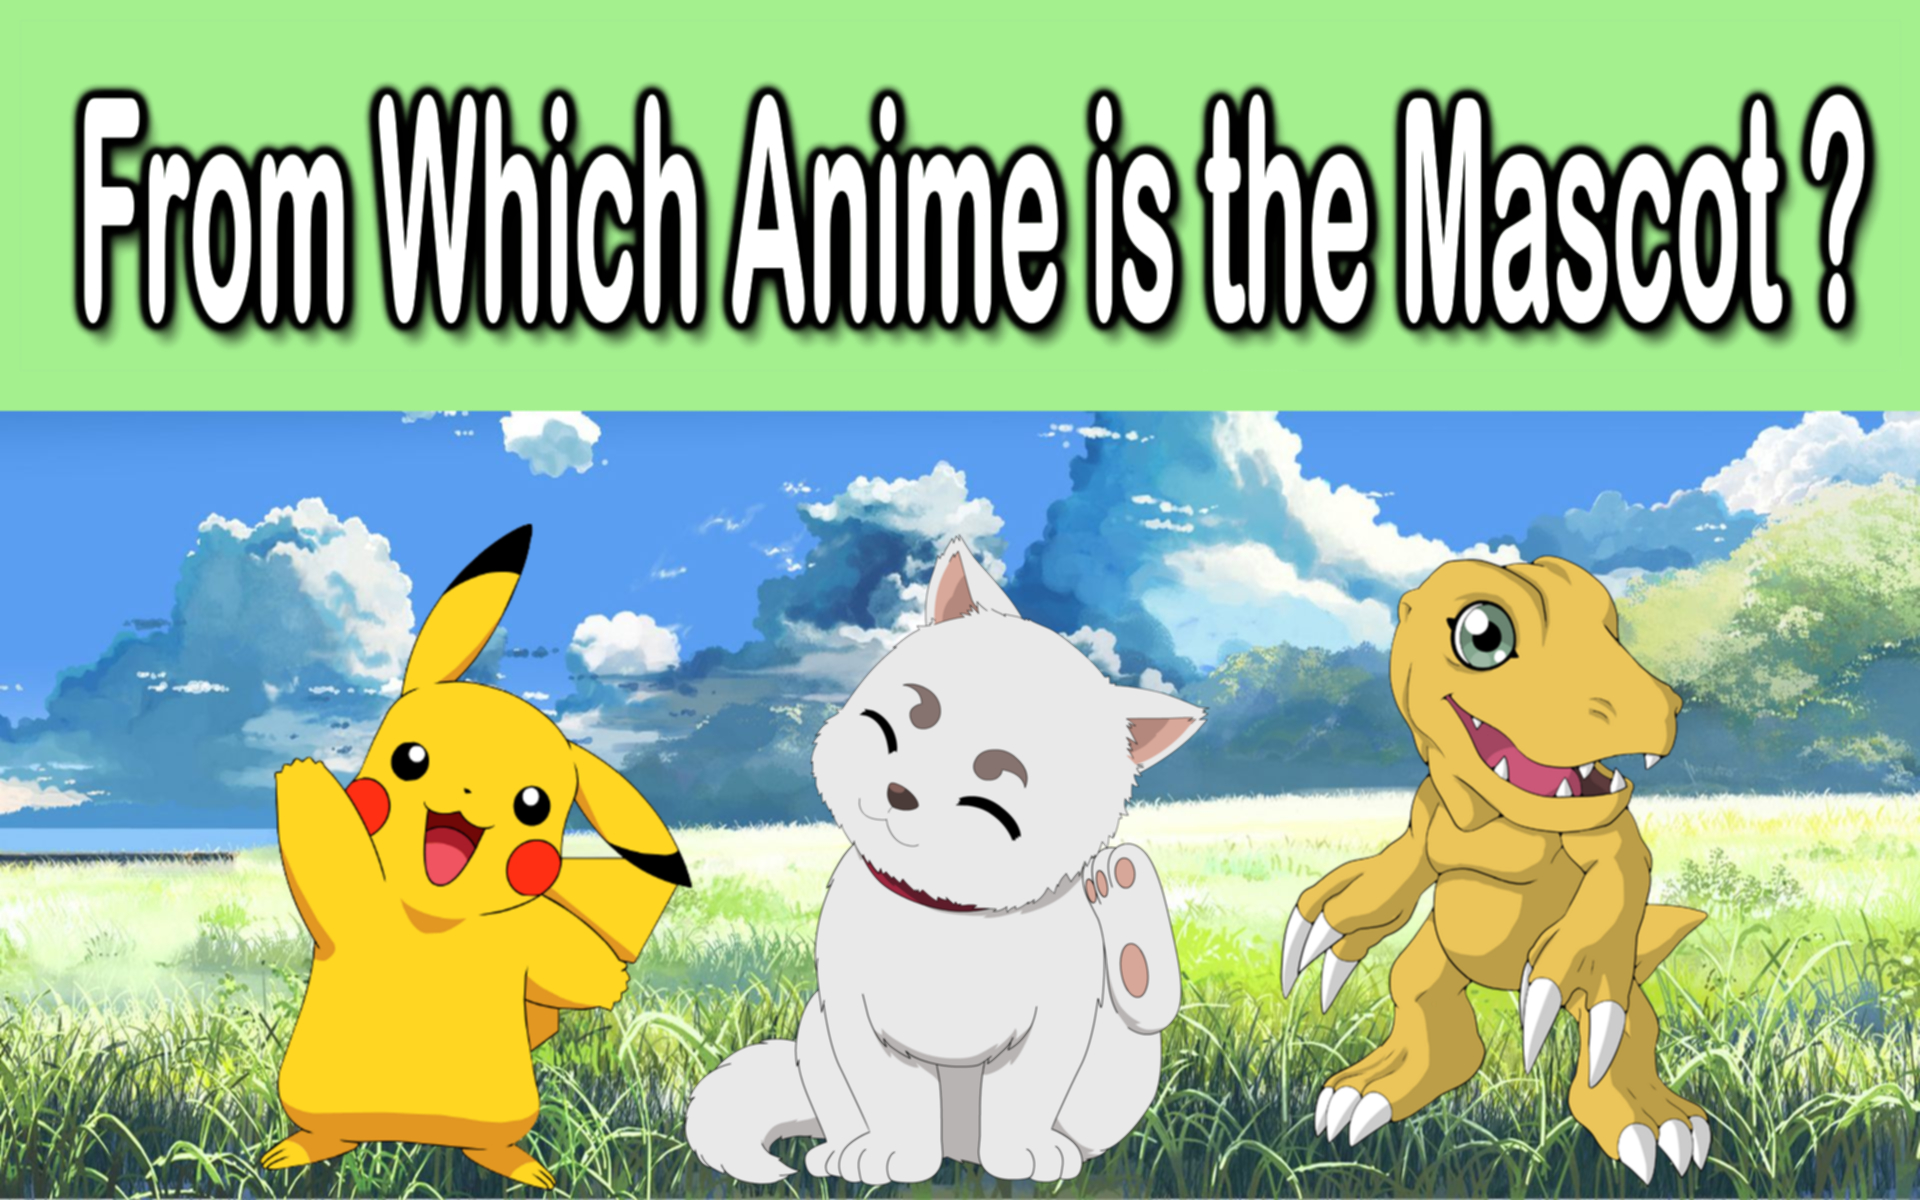 Anime Mascot Quiz